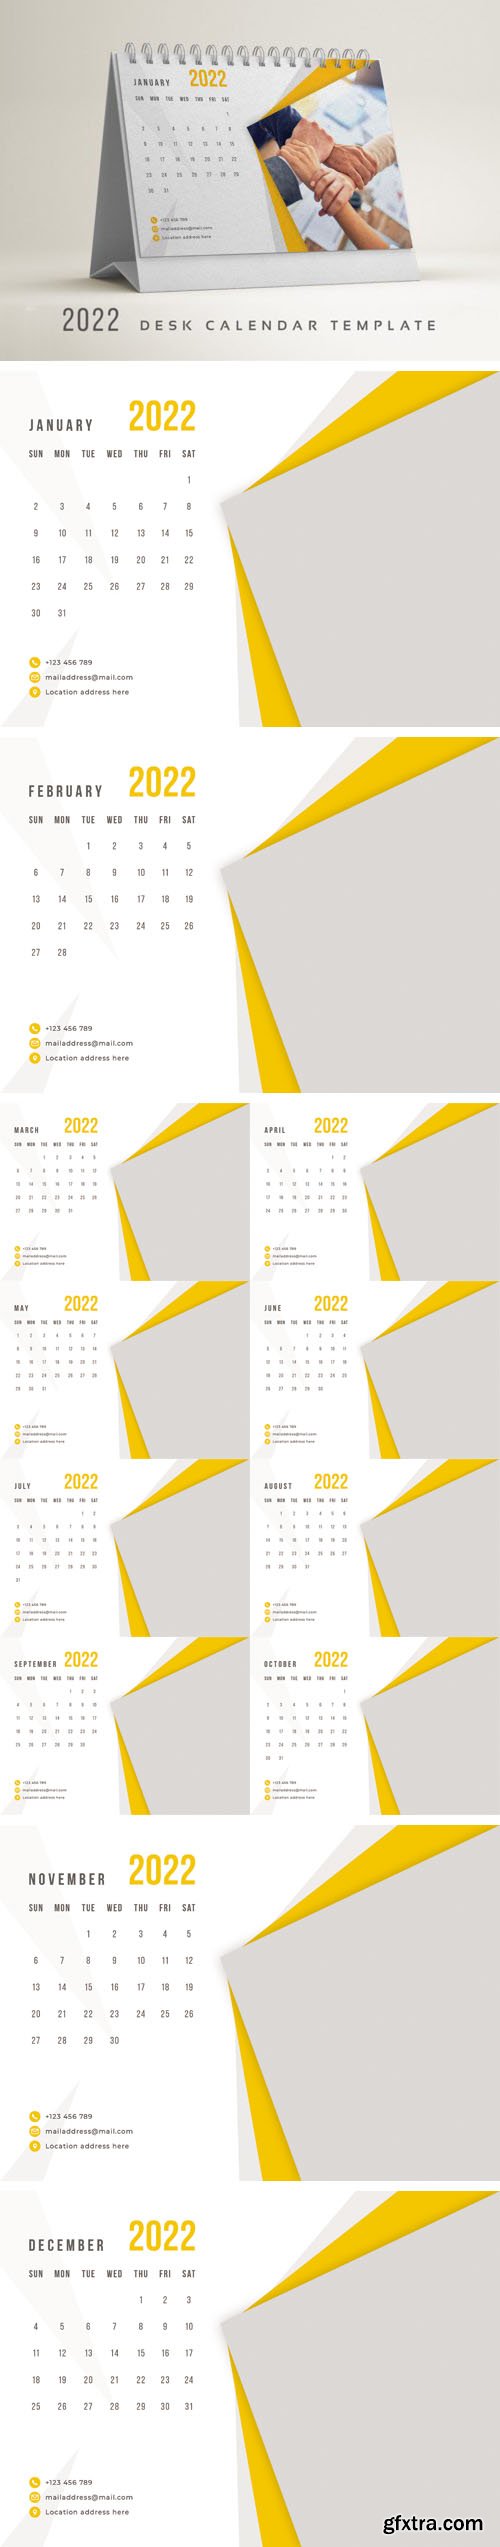 2022 Desk Calendar PSD Template